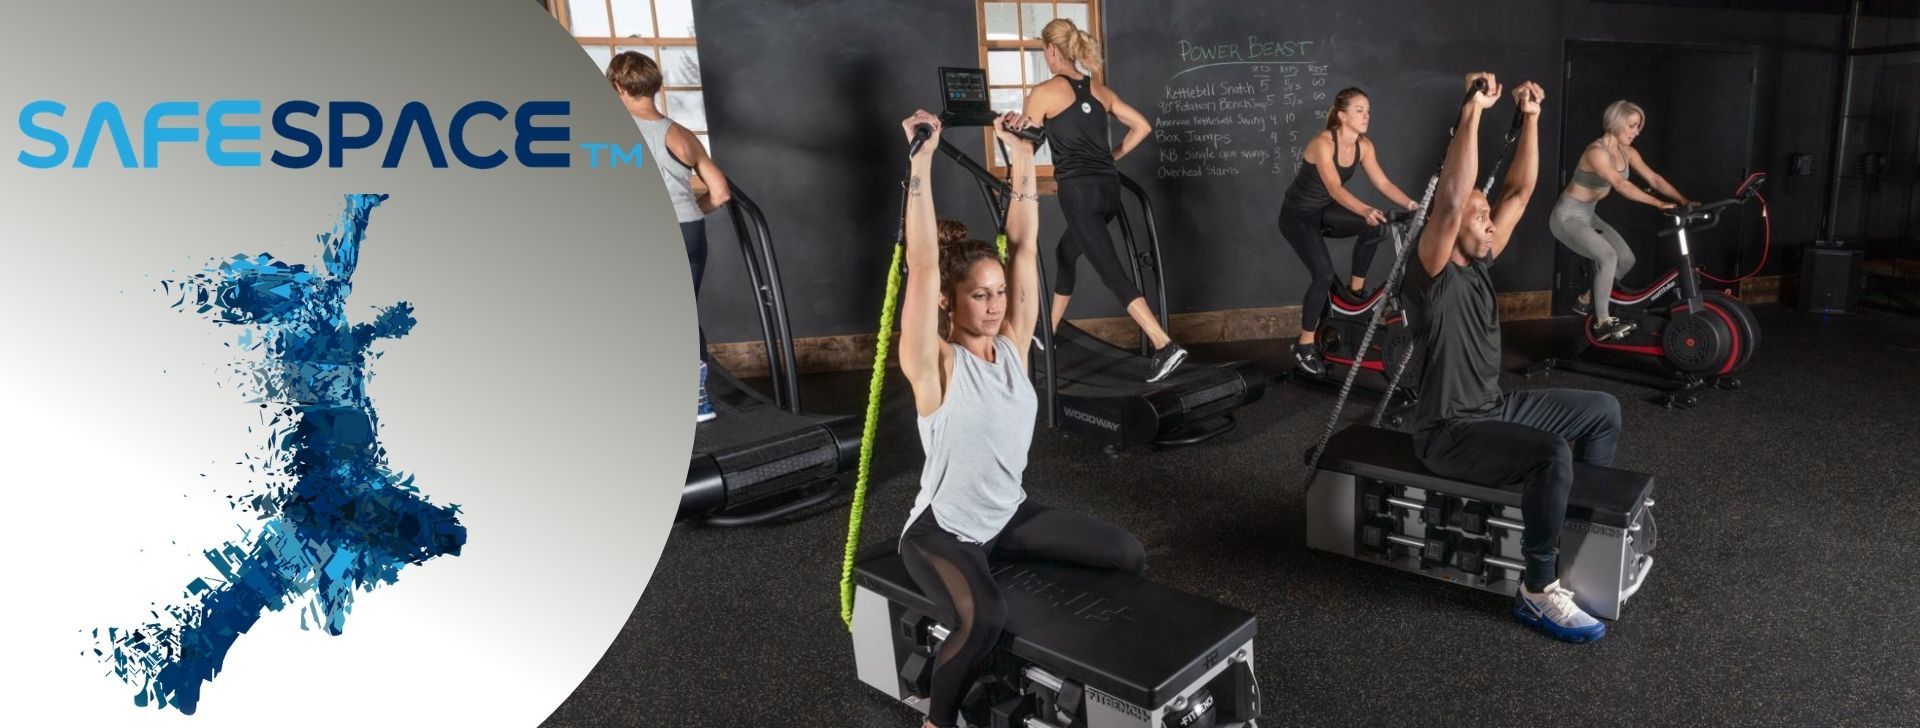 Woodway Curve treadmill - Sports Performance and Rehabilitation Treadmills